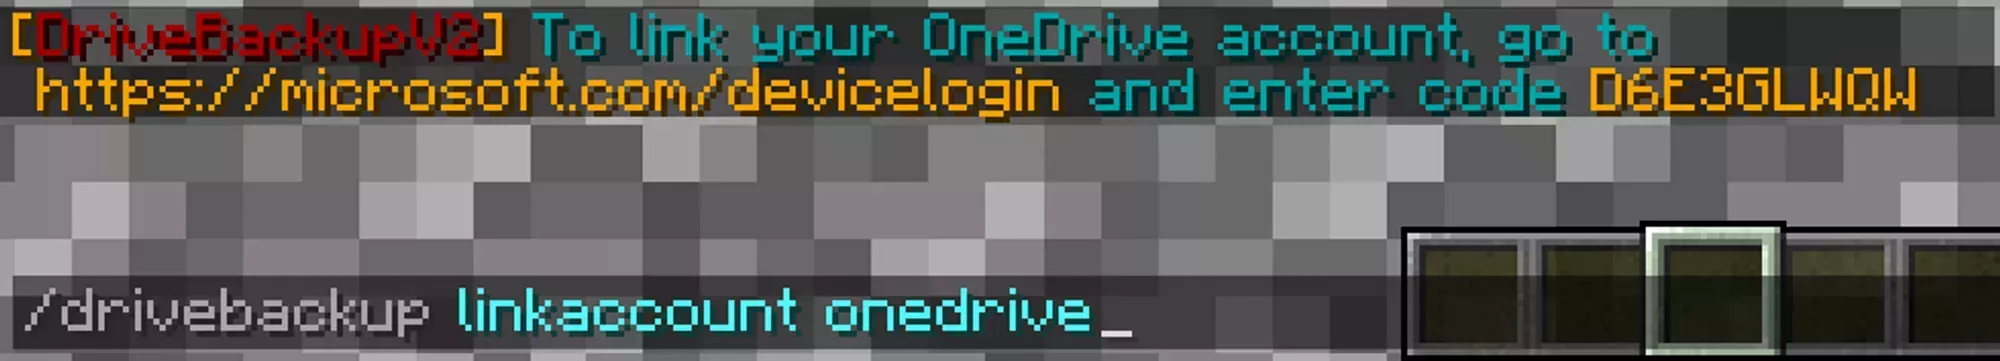 The DriveBackupV2 linkaccount command being run in Minecraft